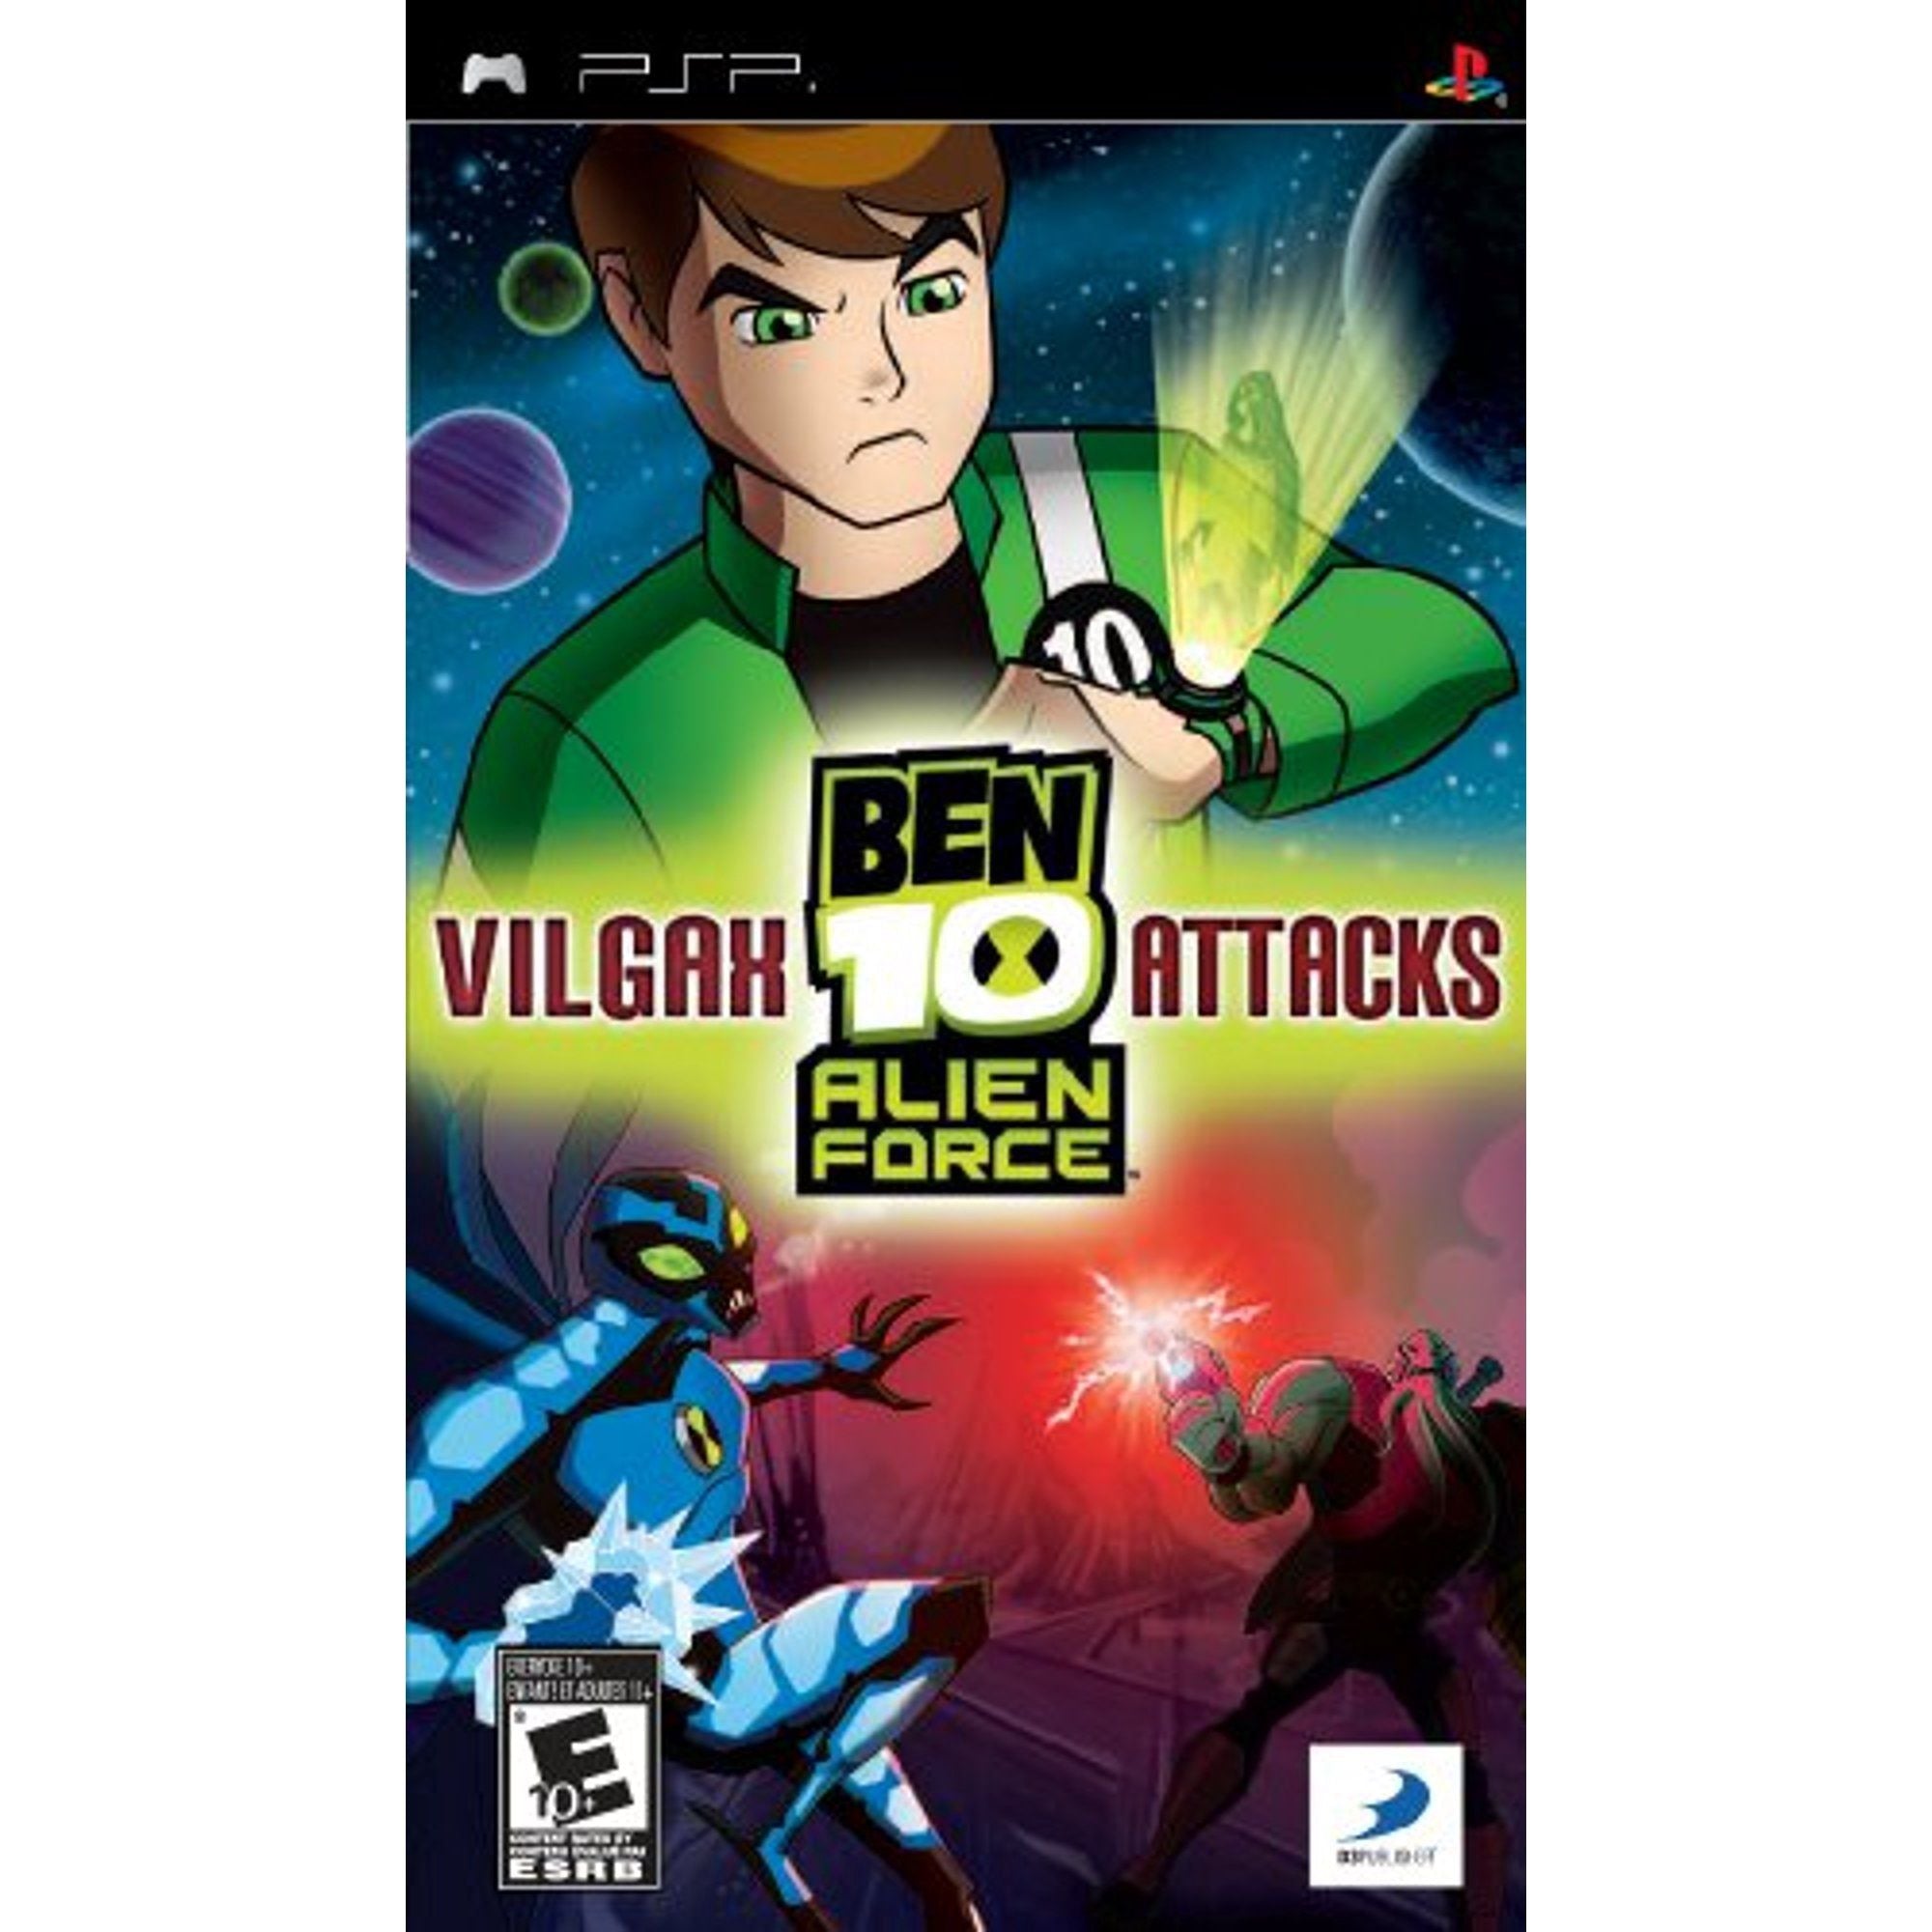 PSP - Ben 10 Alien Force Vilgax Attacks (Au cas où)